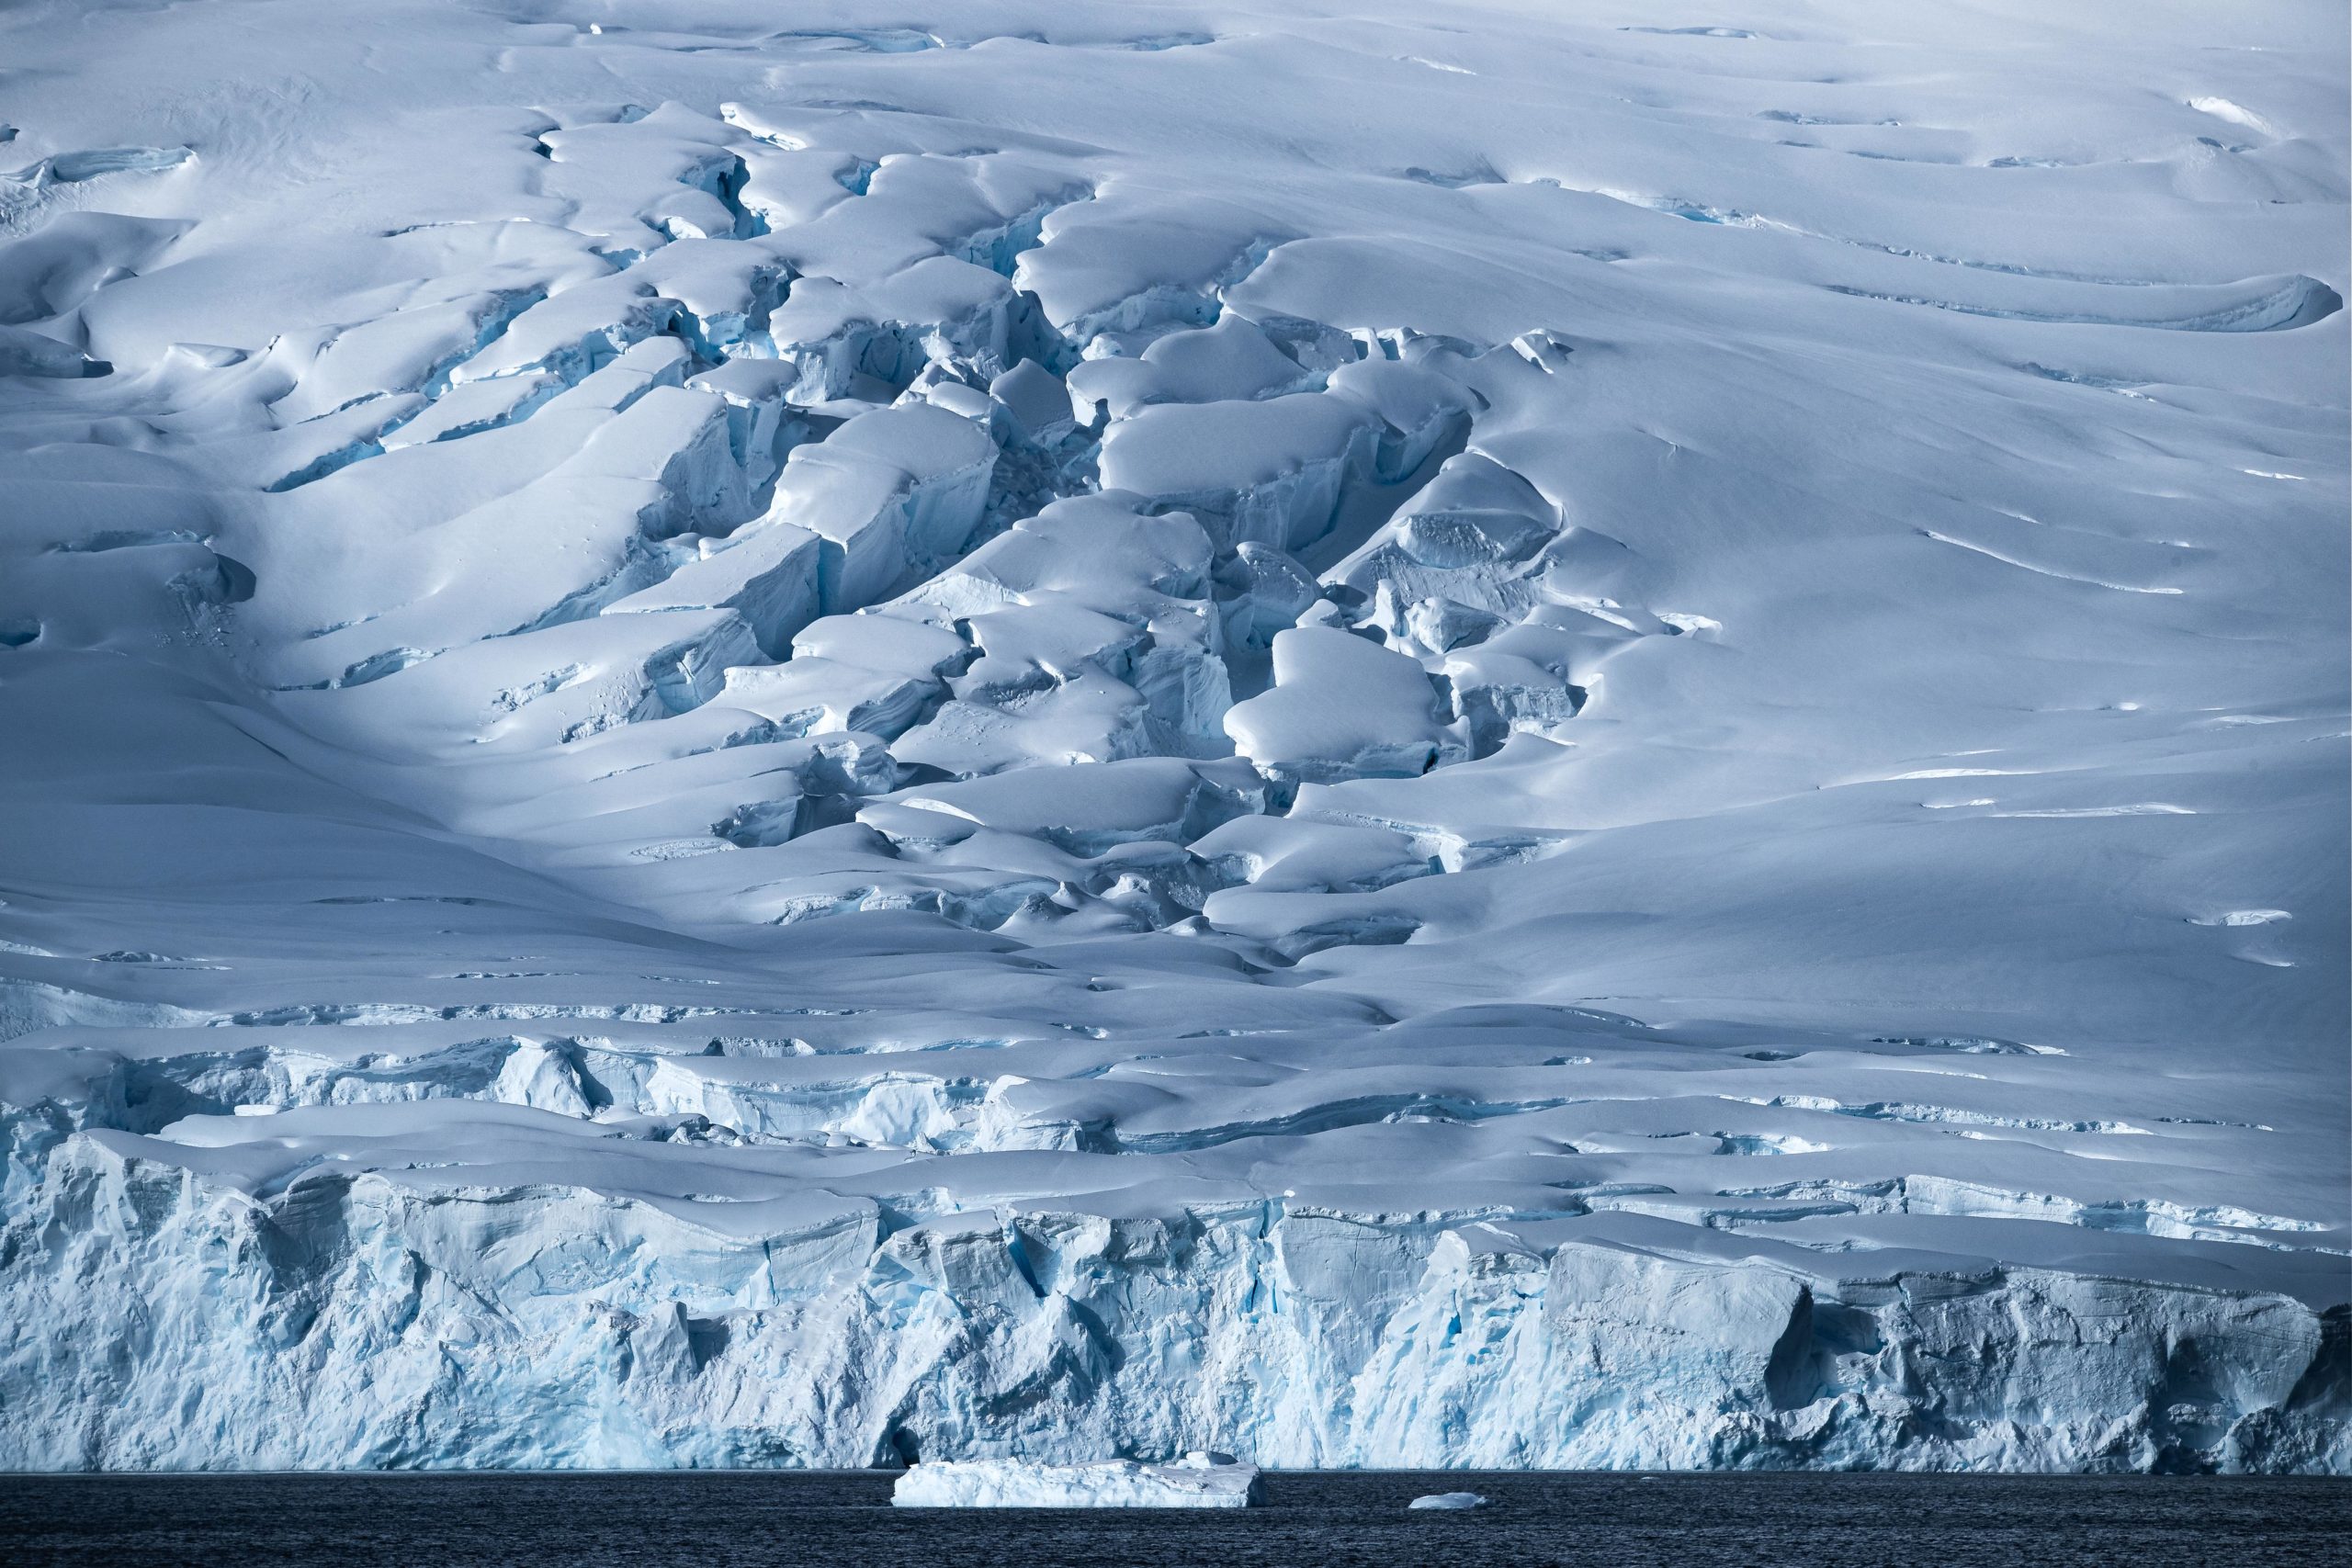 A large glacier meeting the ocean in Antarctica